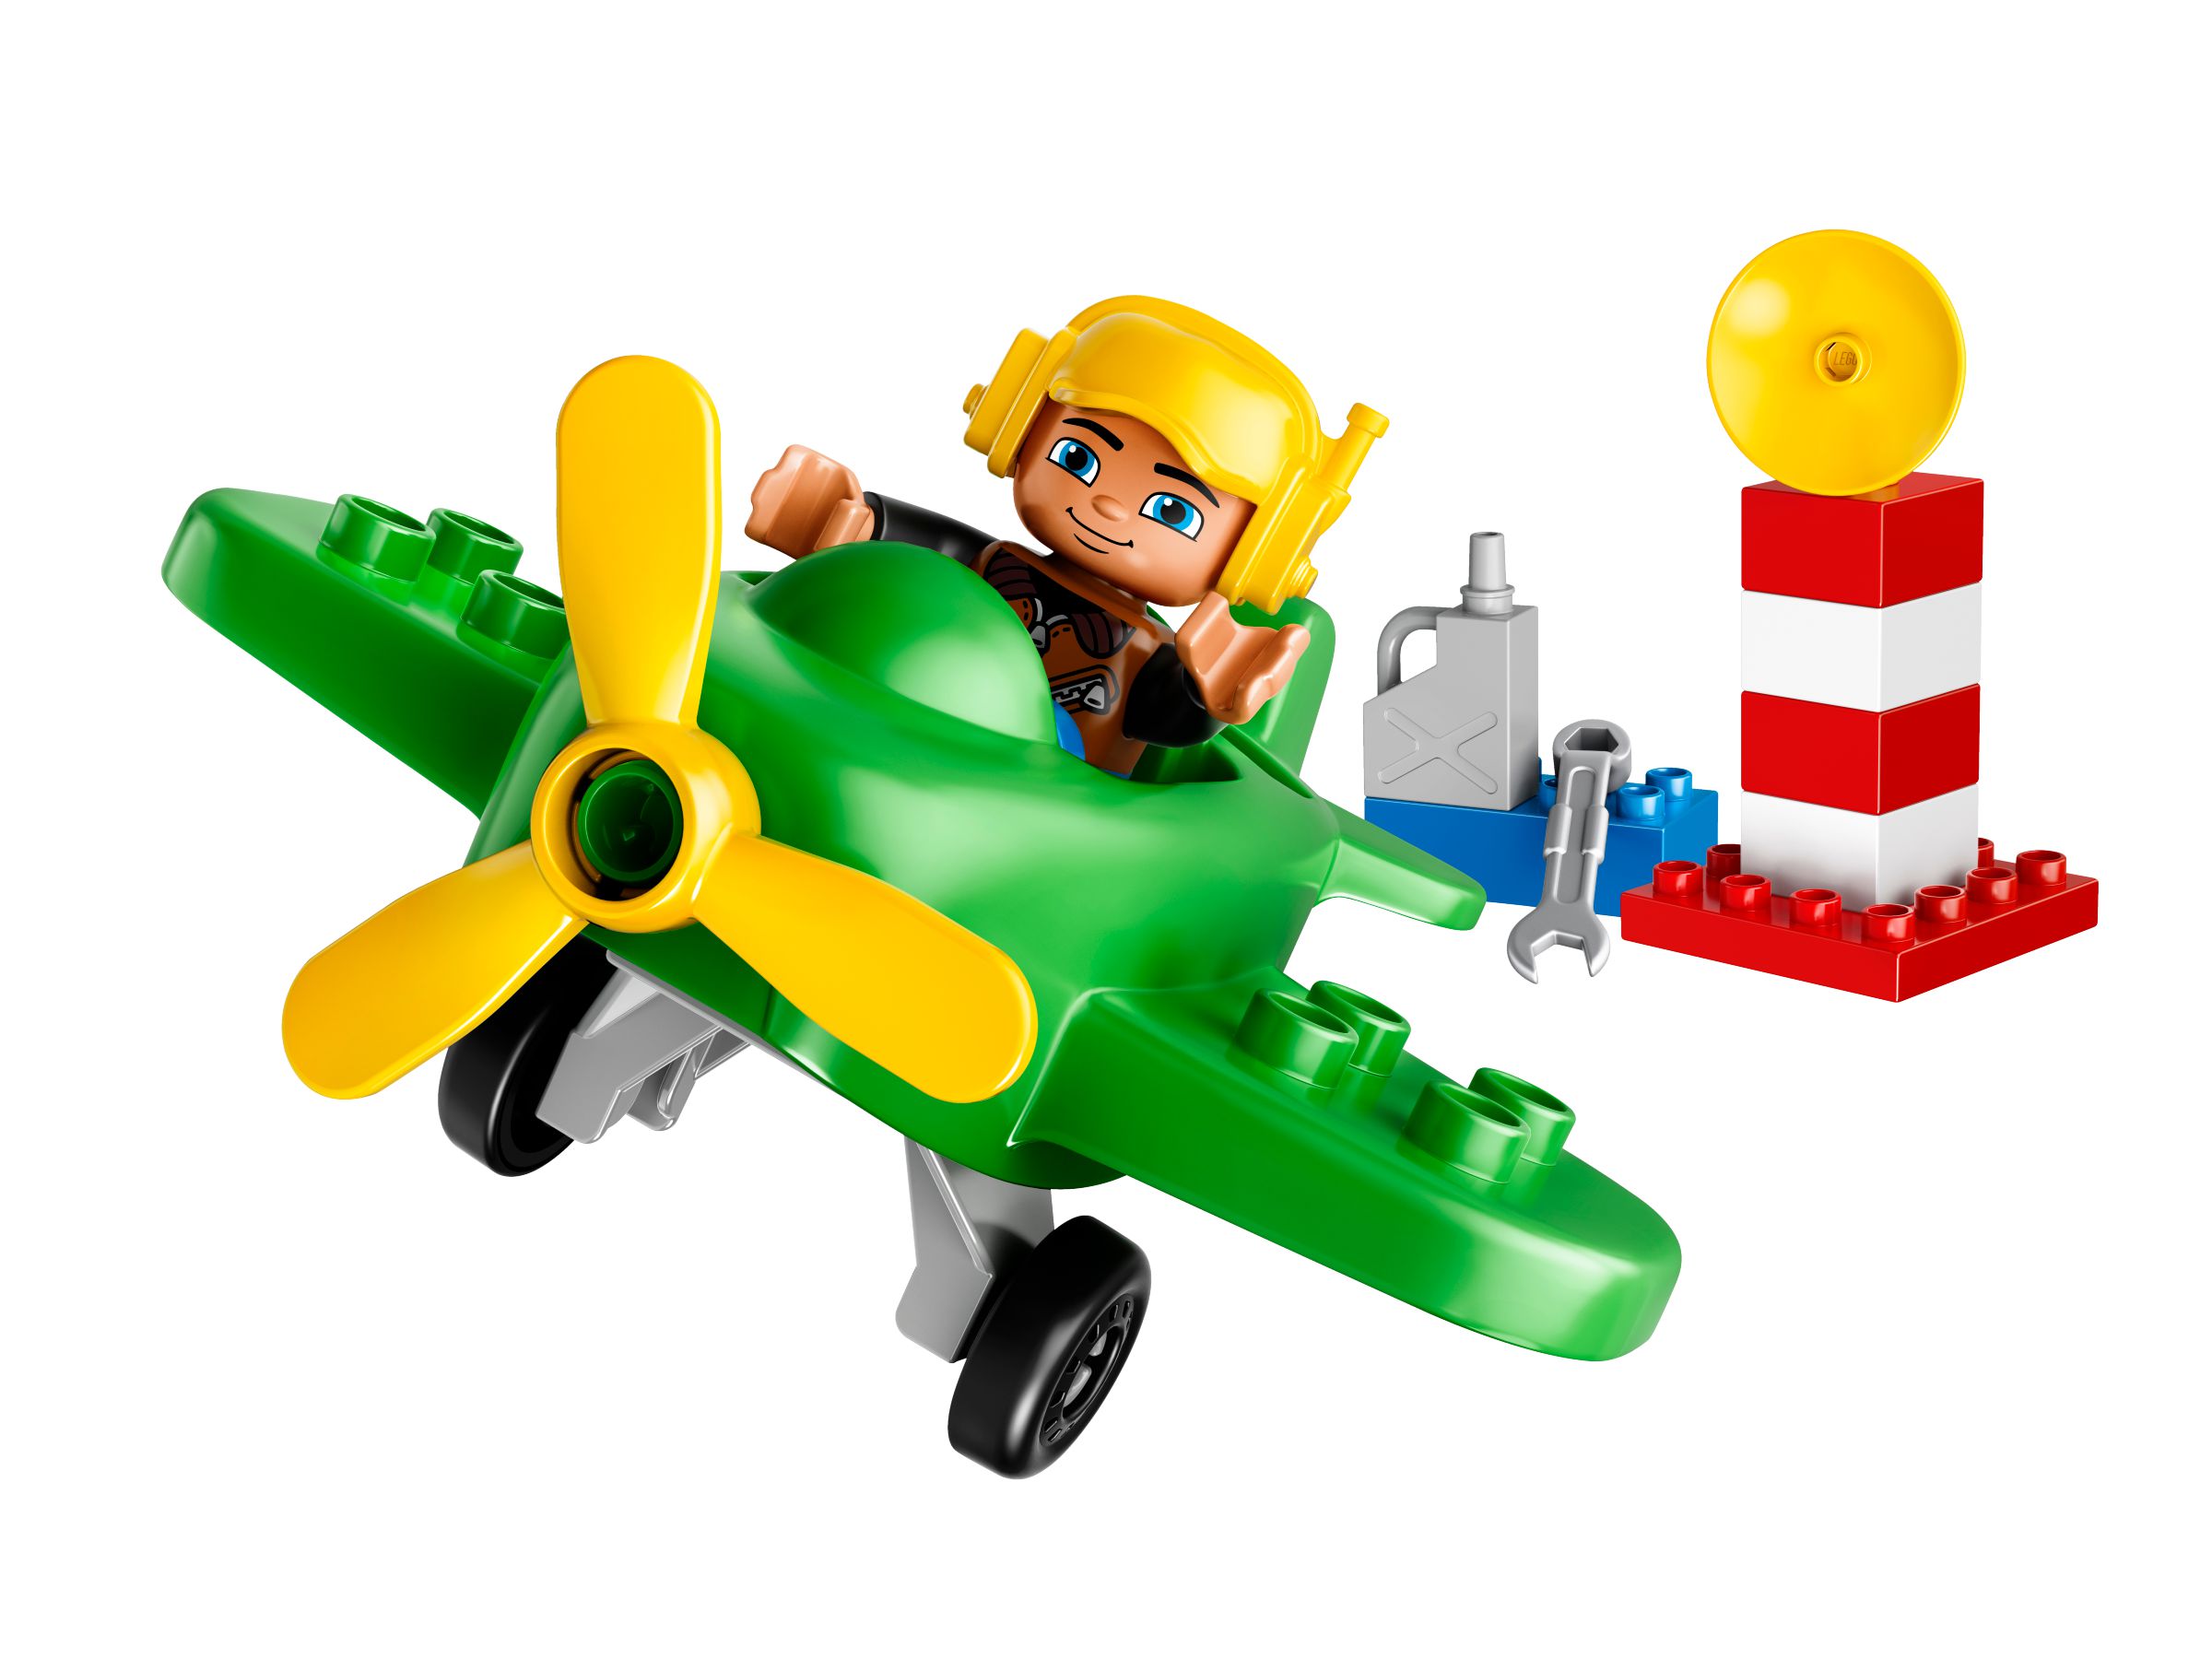 LEGO Duplo 10808 Kleines Flugzeug LEGO_10808.jpg